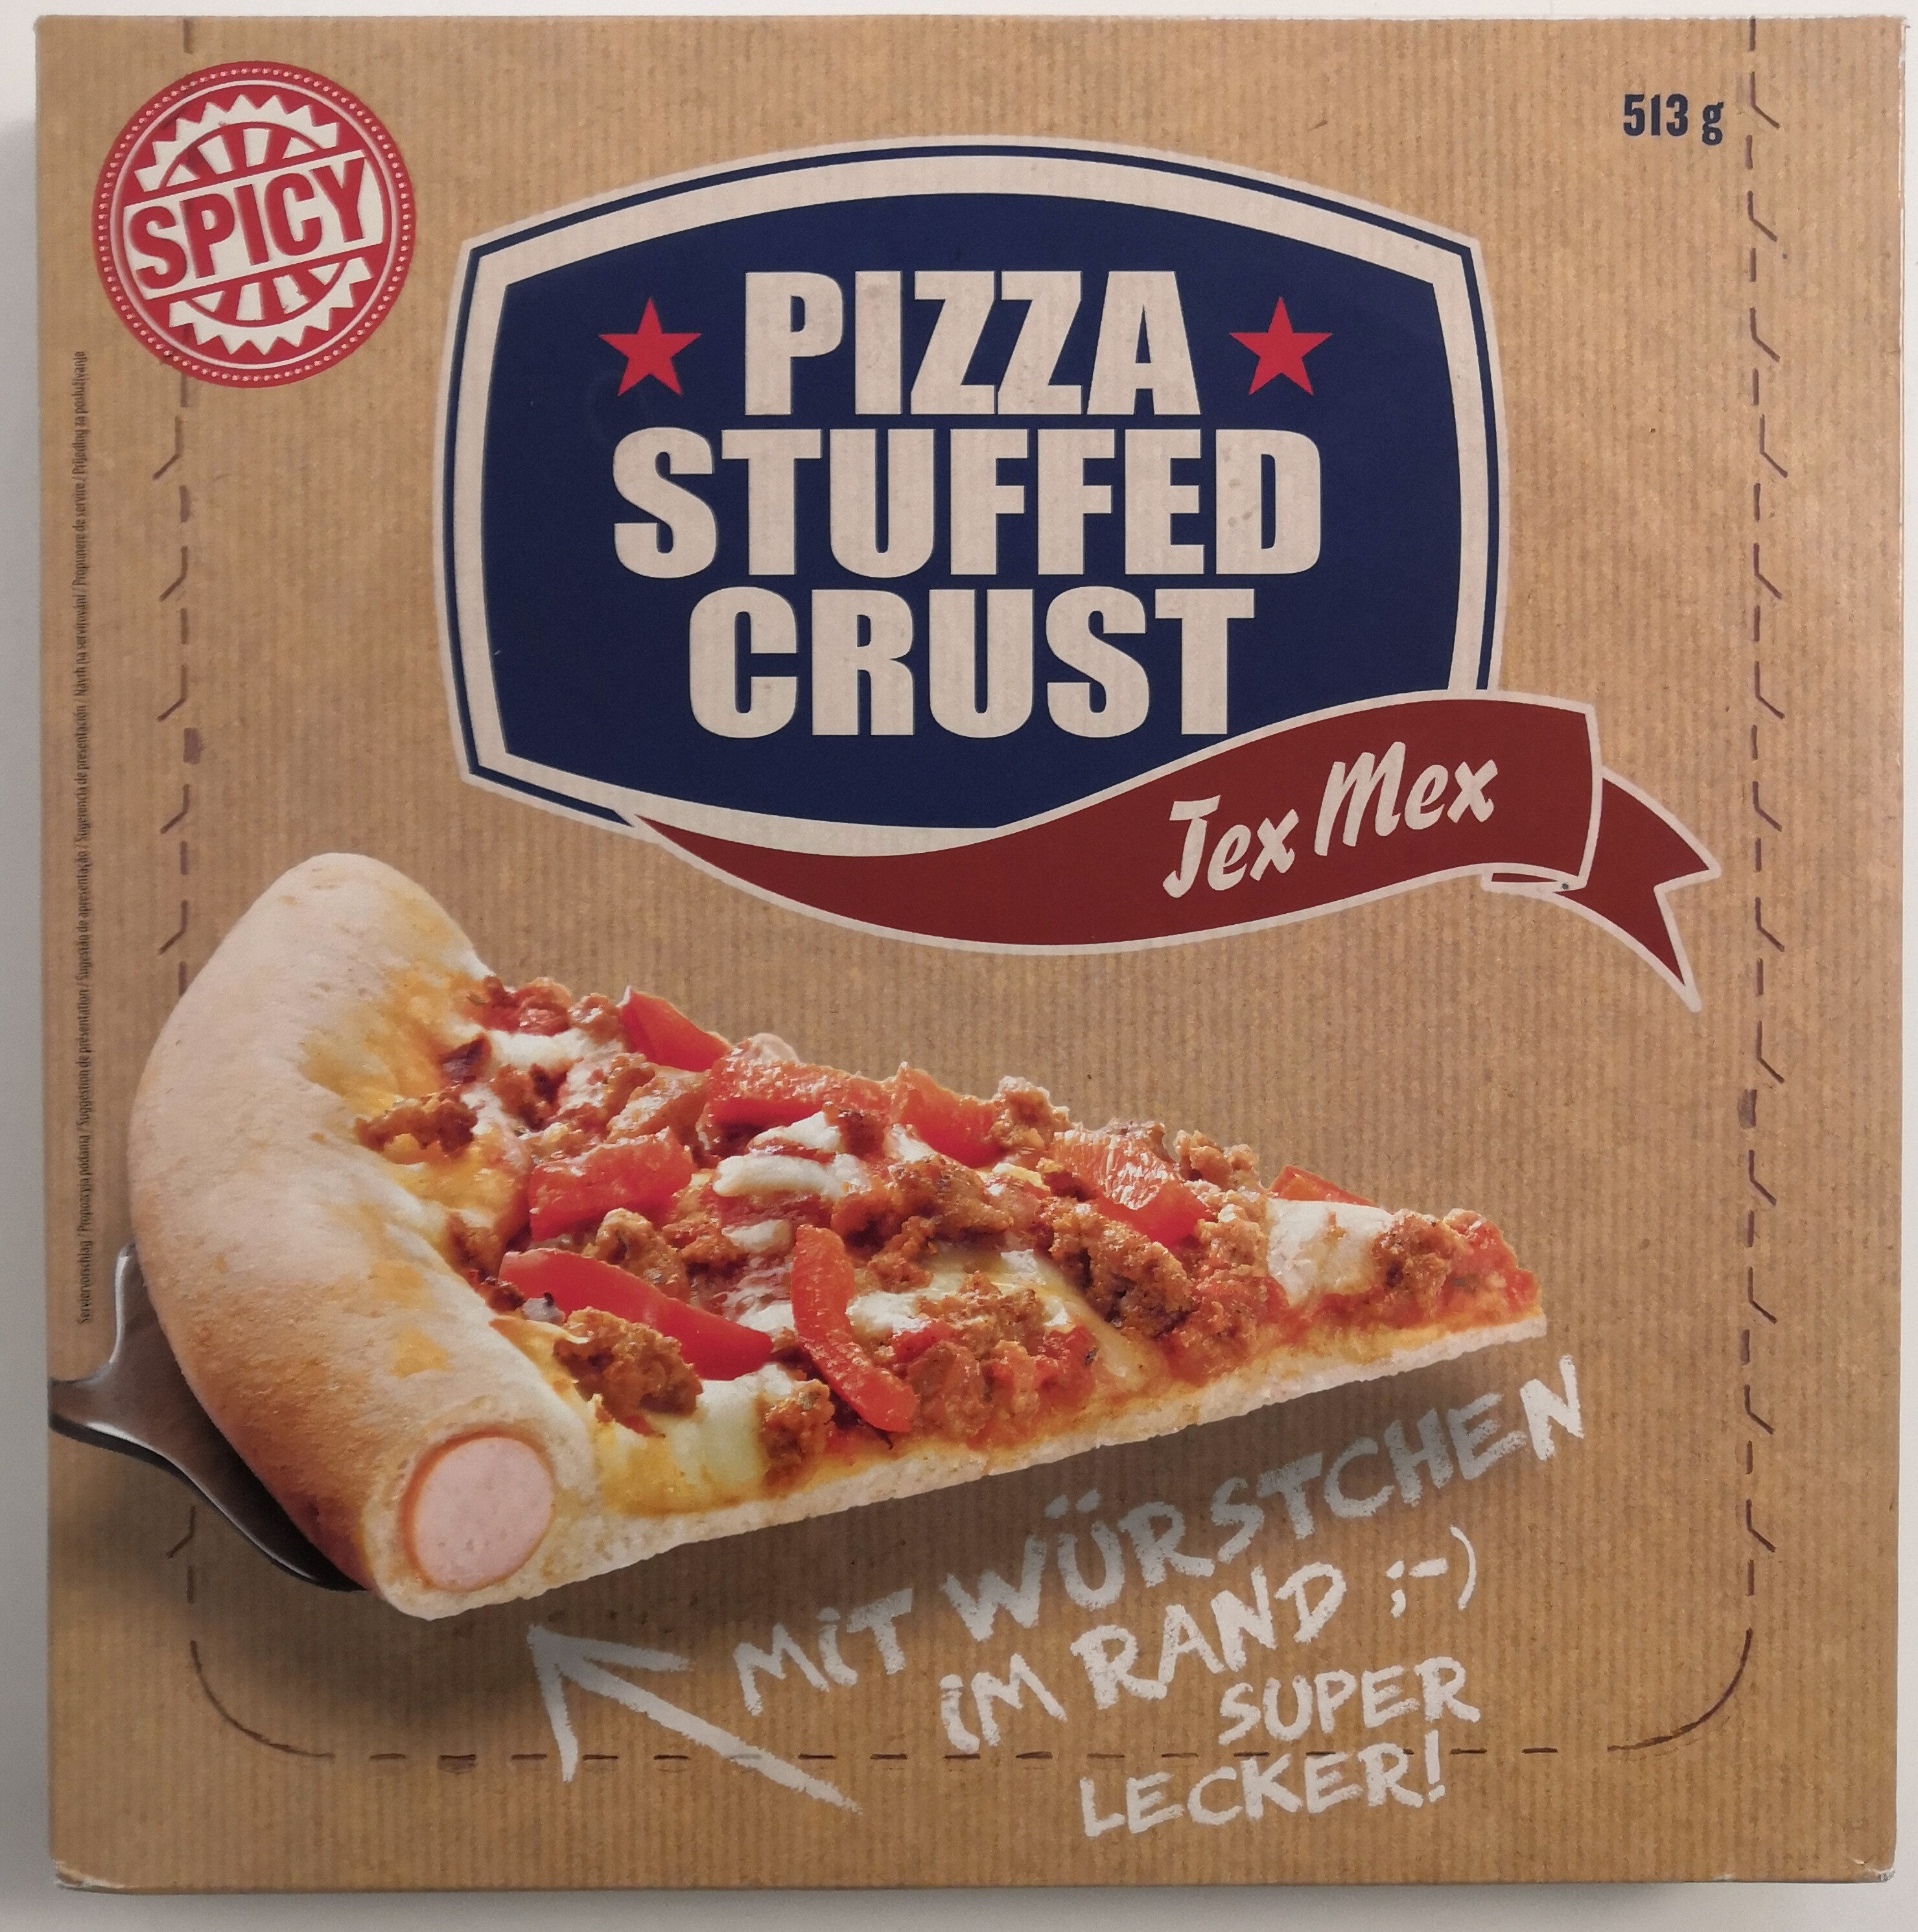 Stuffed crust